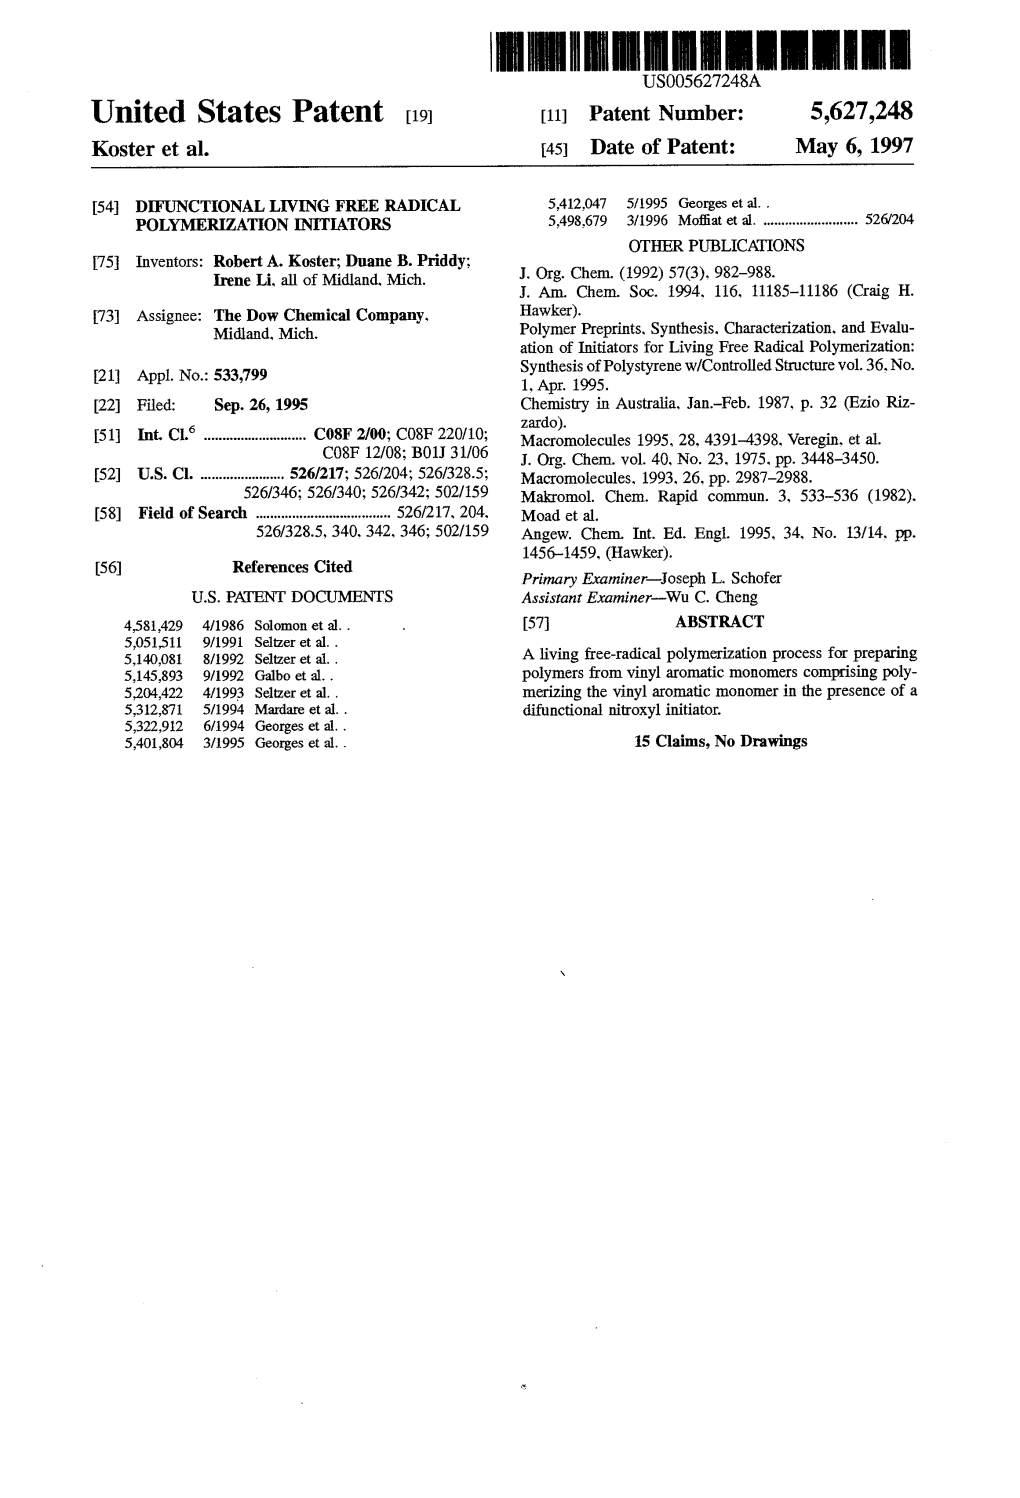 United States Patent 19 11 Patent Number: 5,627,248 Koster Et Al